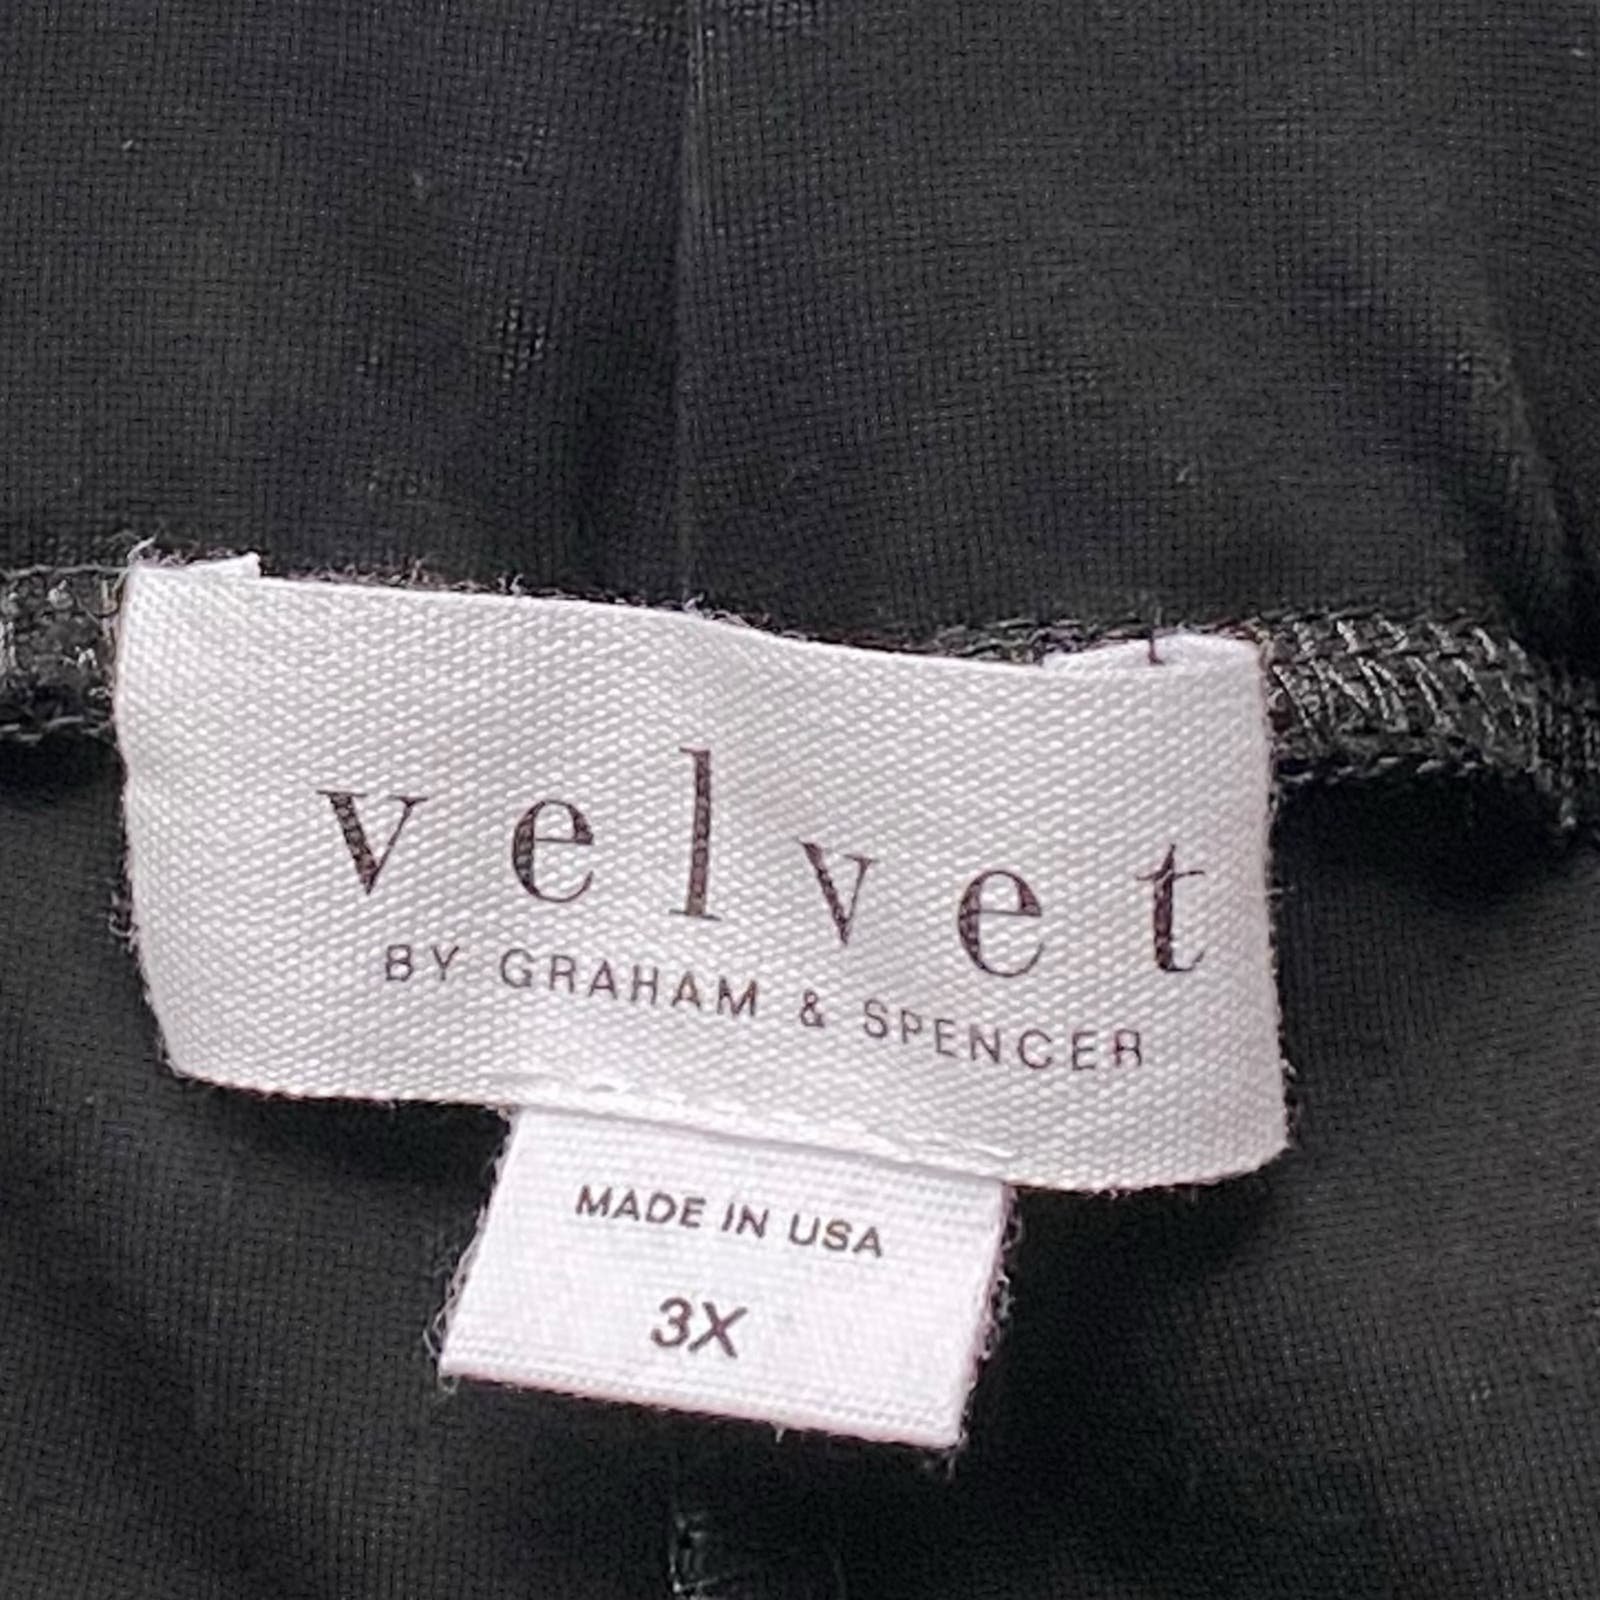 the Lowest price NWT Velvet By Graham & Spencer Monterey Pant Black Size 3X LqJQrf5s0 Low Price